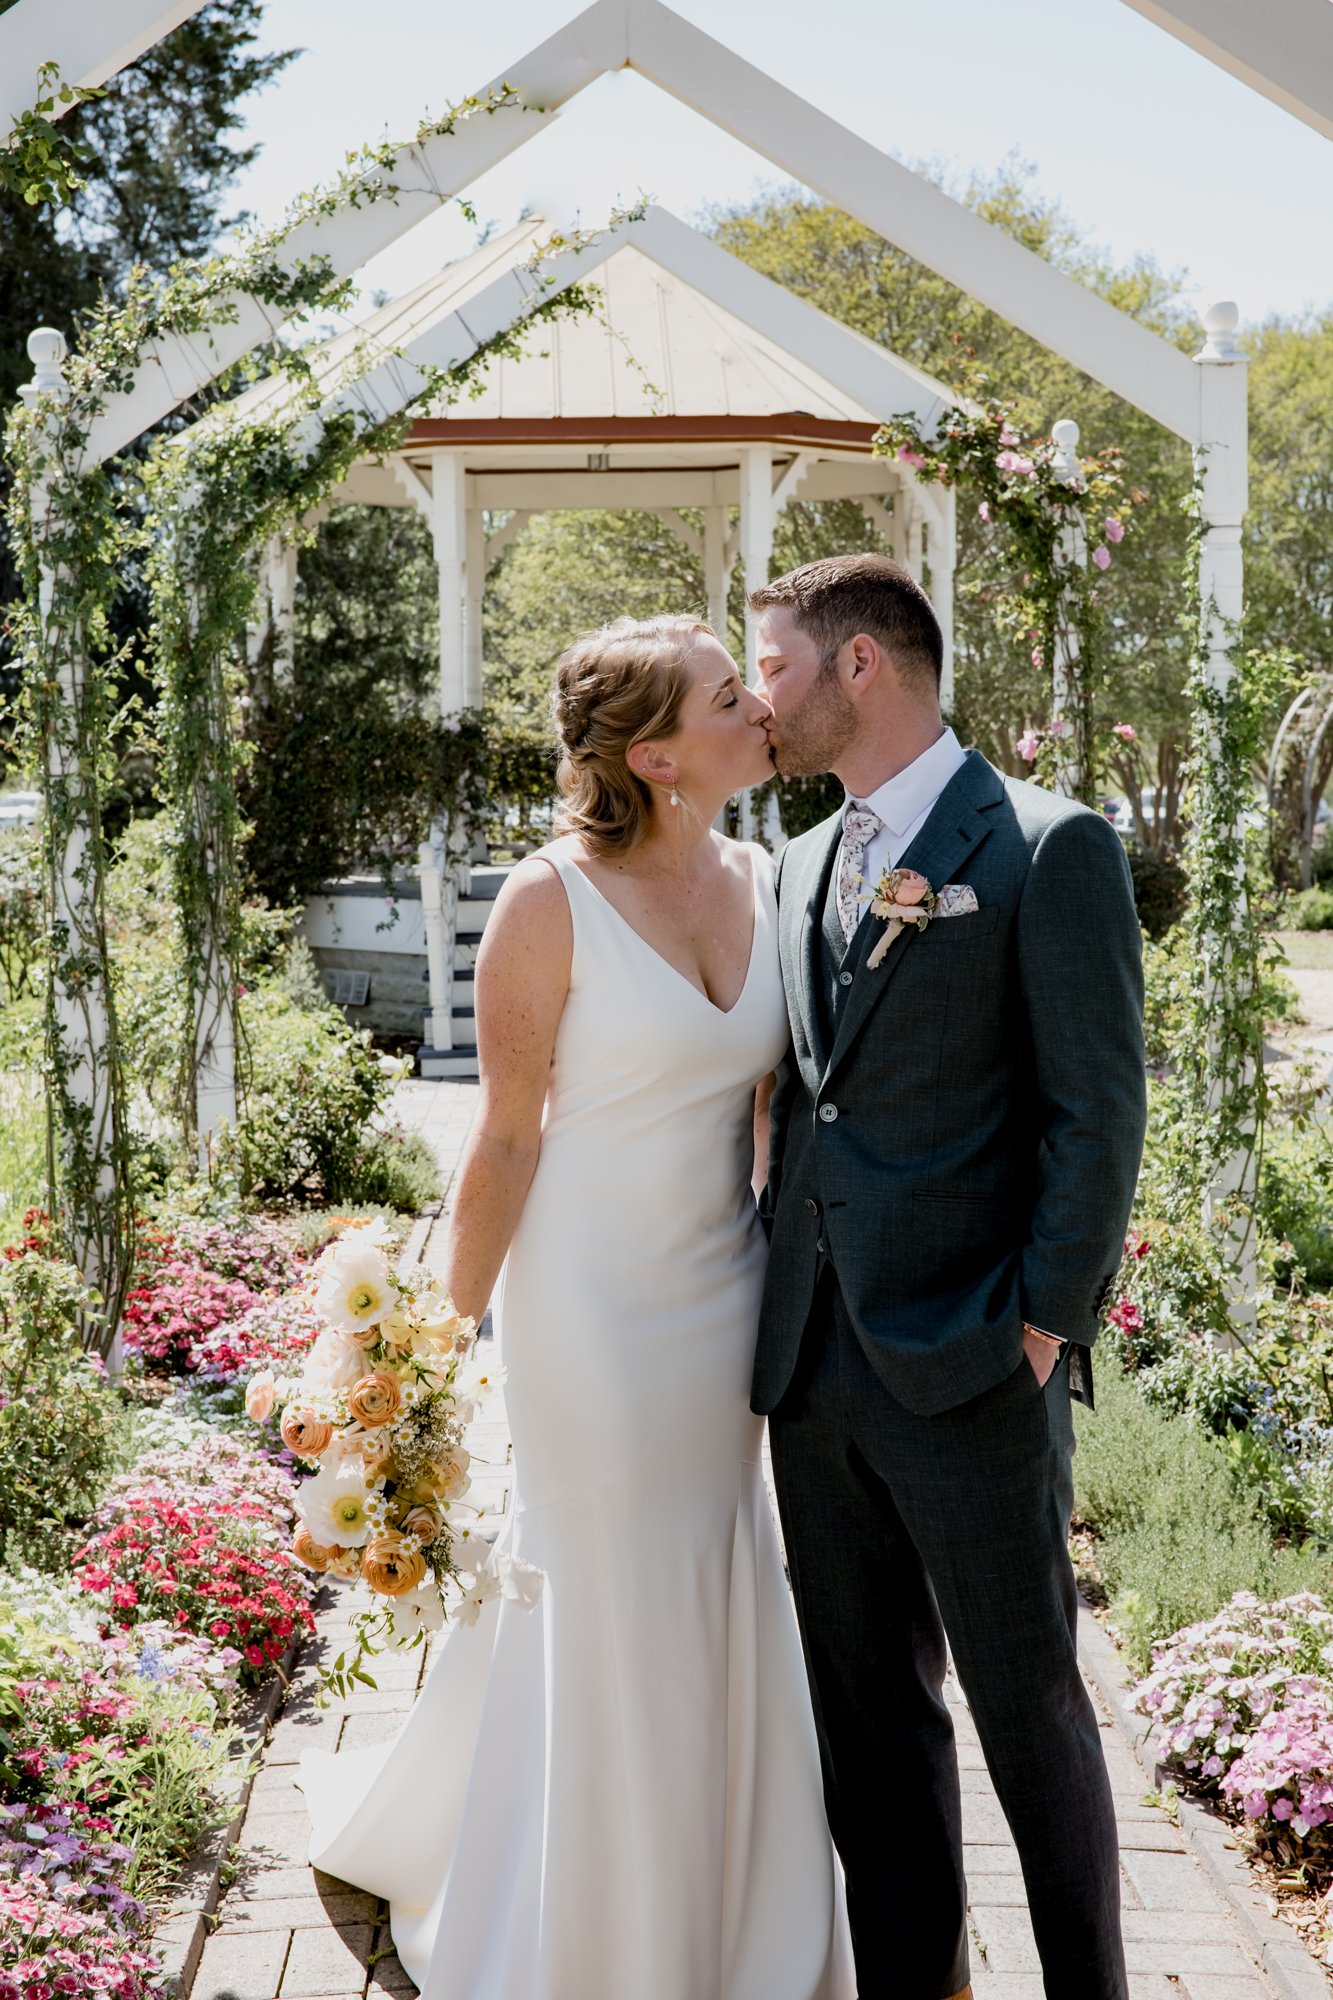 Bride and groom kiss under the arch in the flower garden. Wedding at Antique Rose Emporium